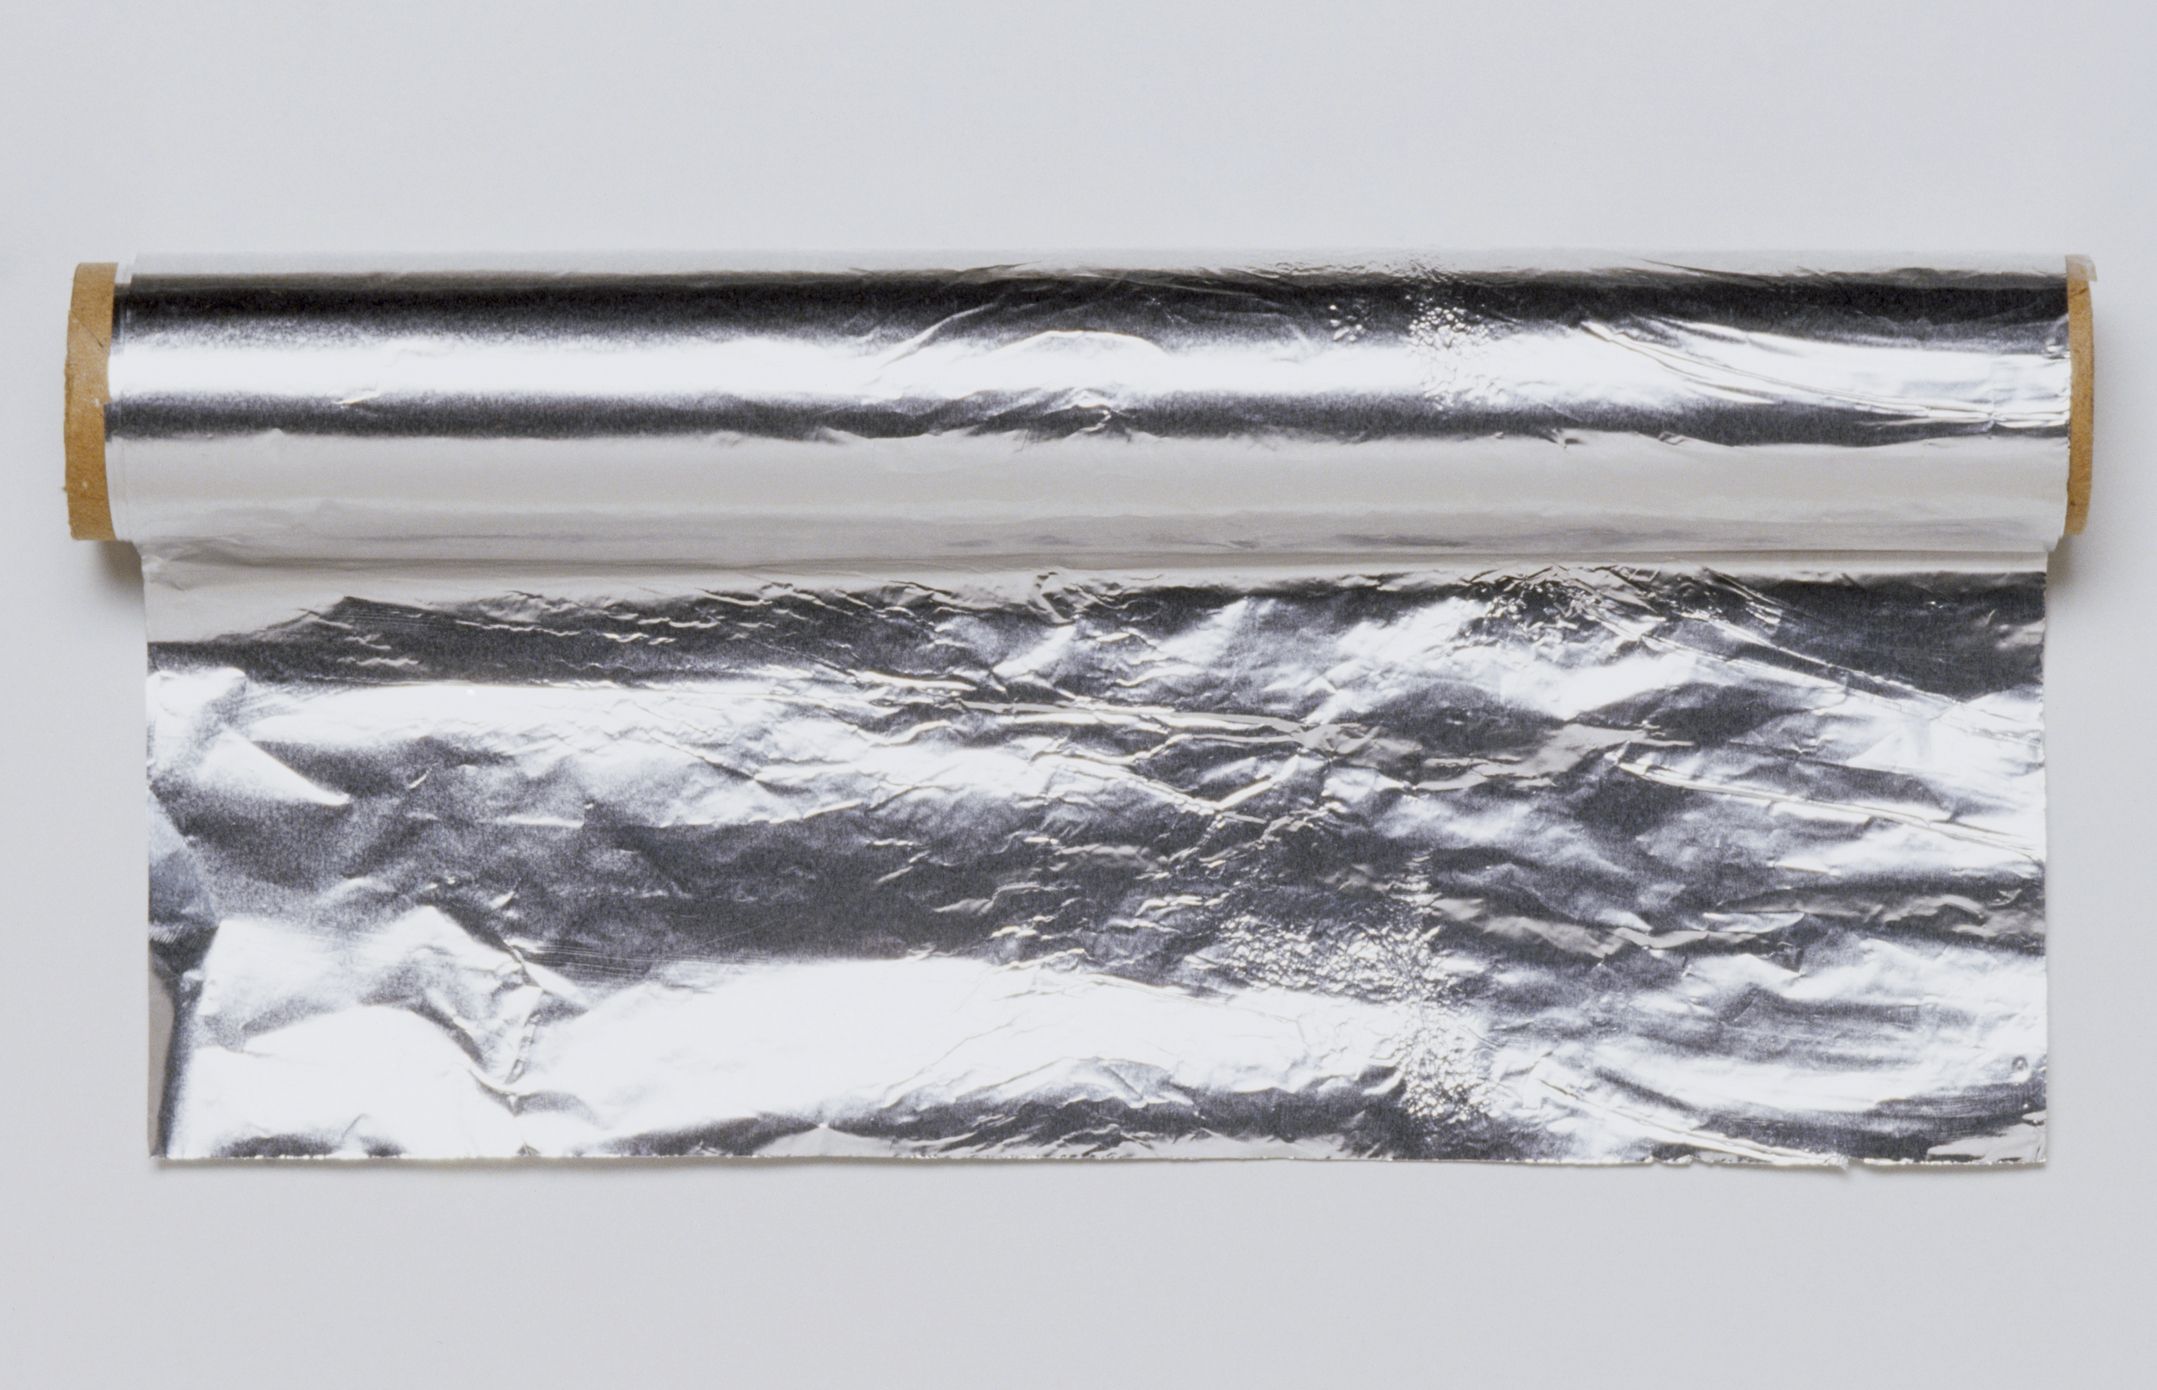 New Uses for Aluminum Foil - Surprising Ways to Use Aluminum Foil